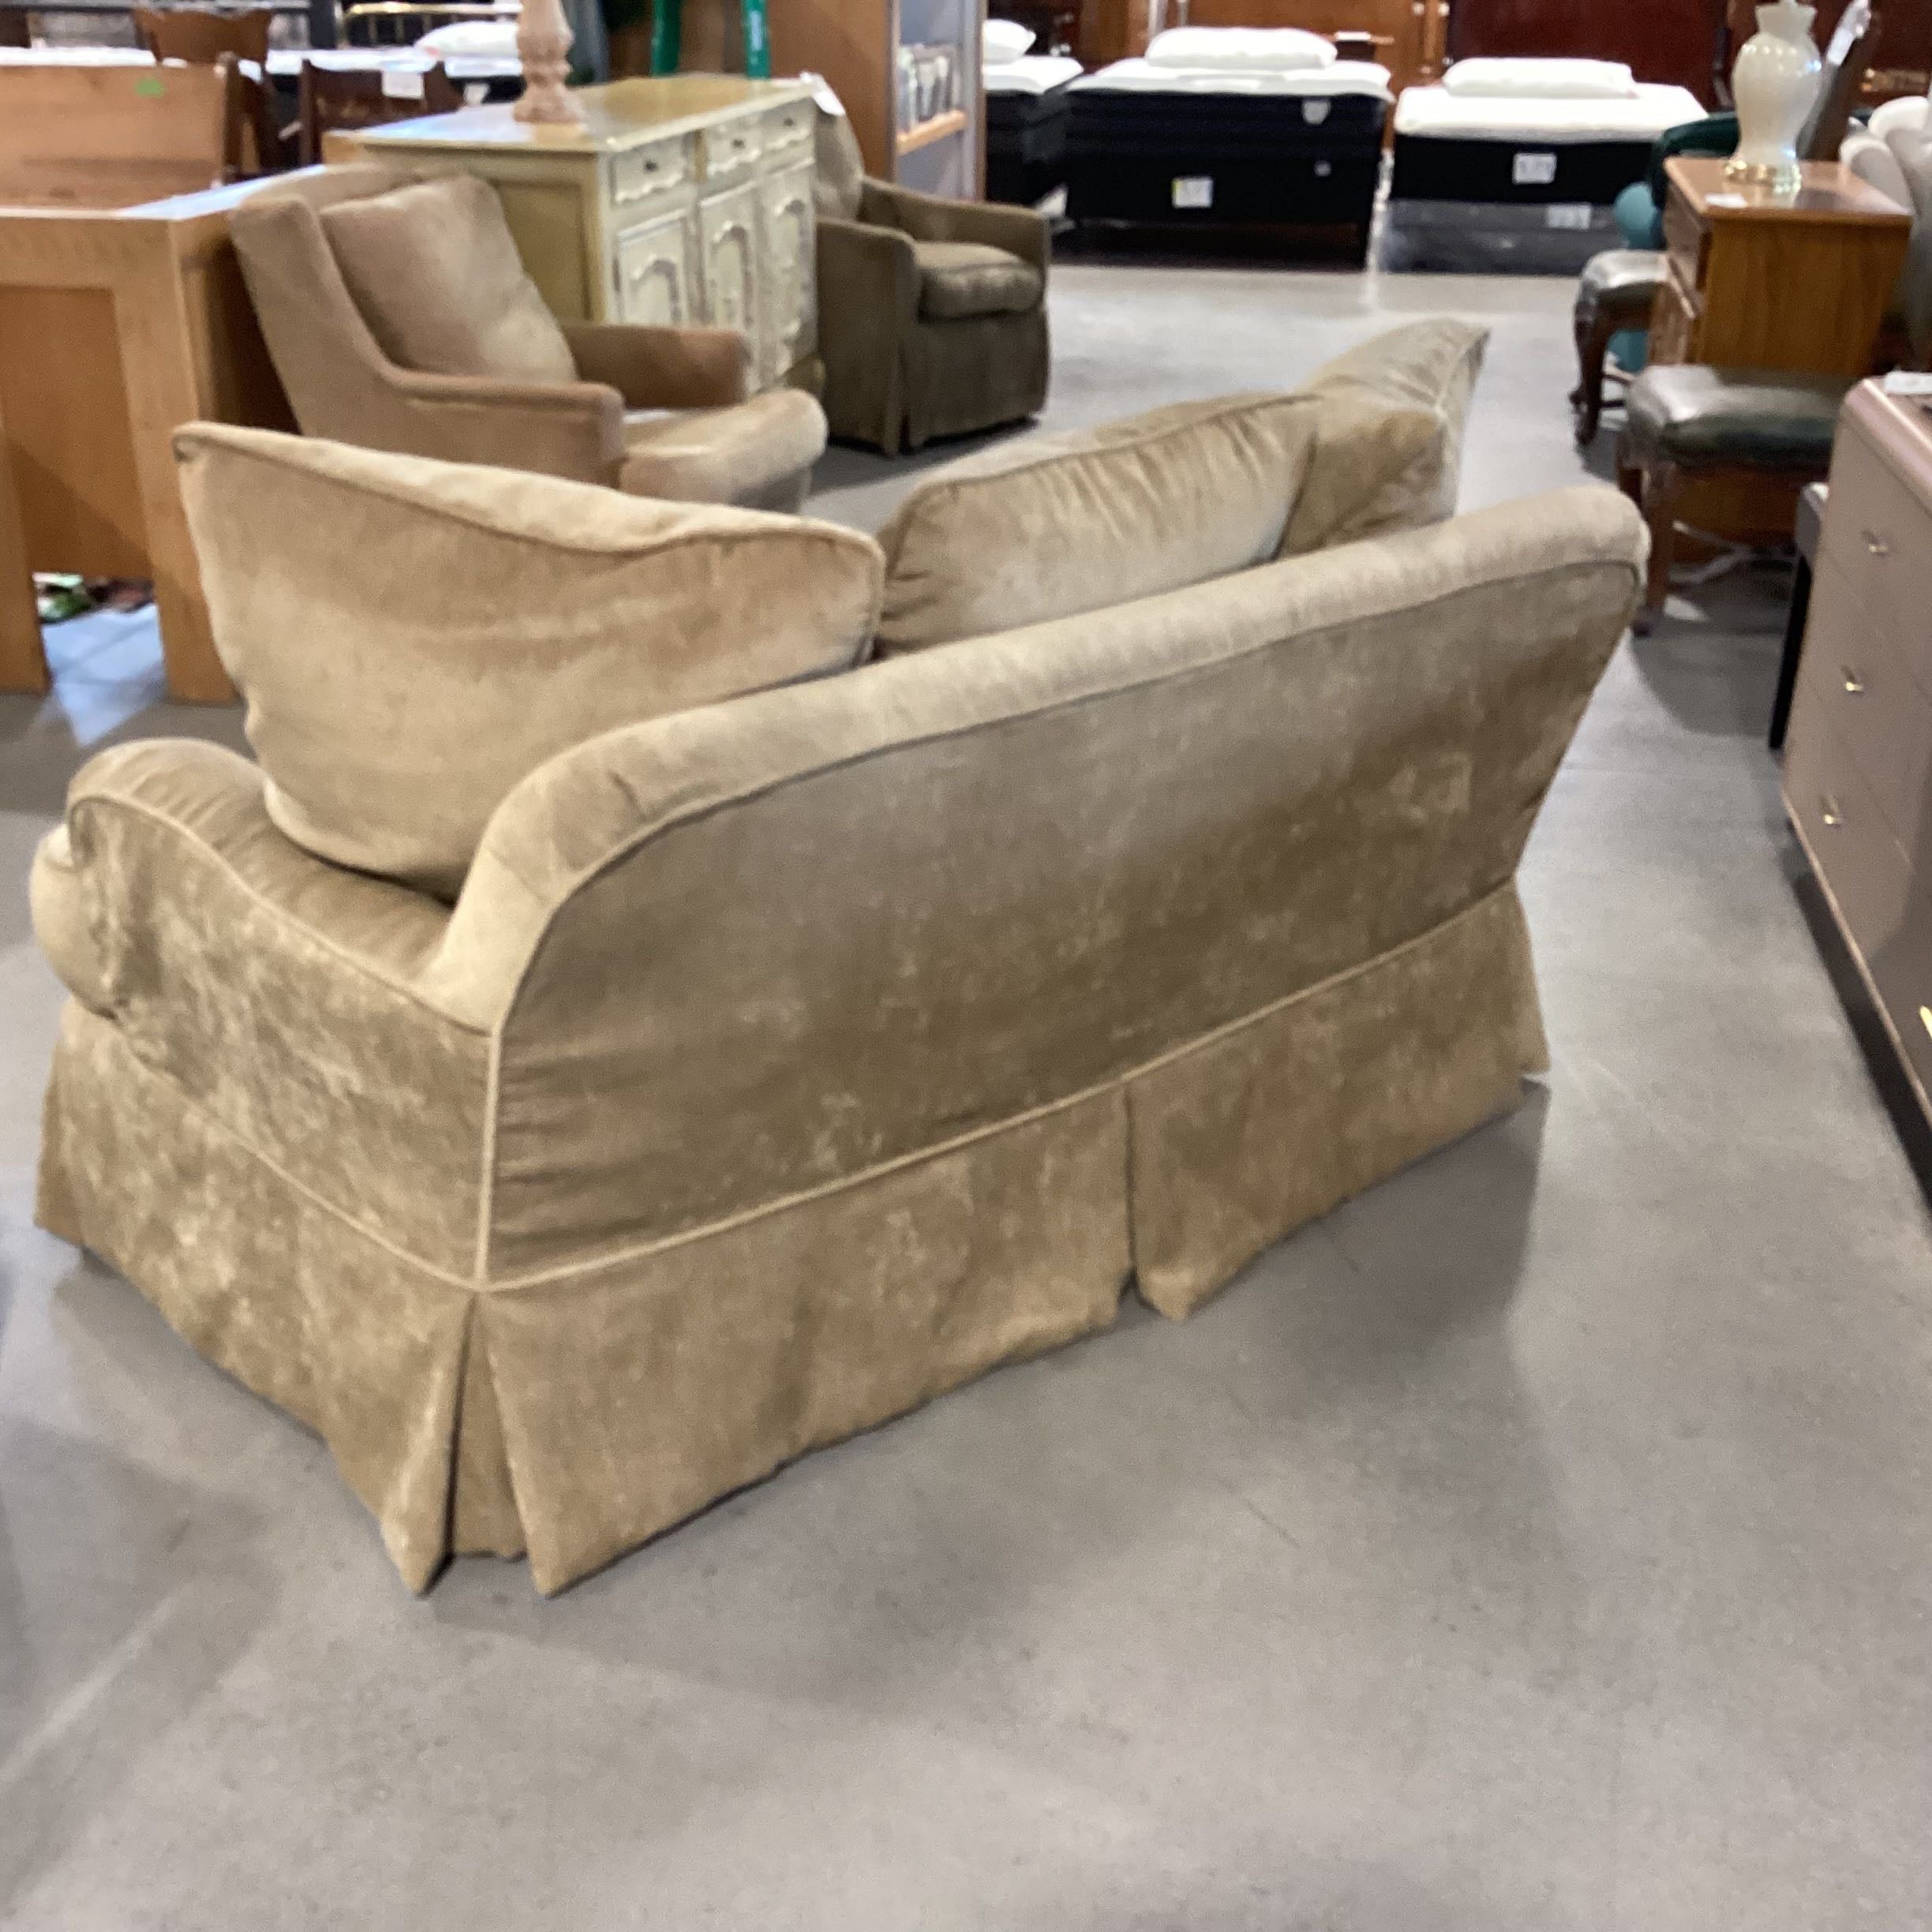 Quatrine Washable Furniture Golden Slipcovered Loveseat Sofa